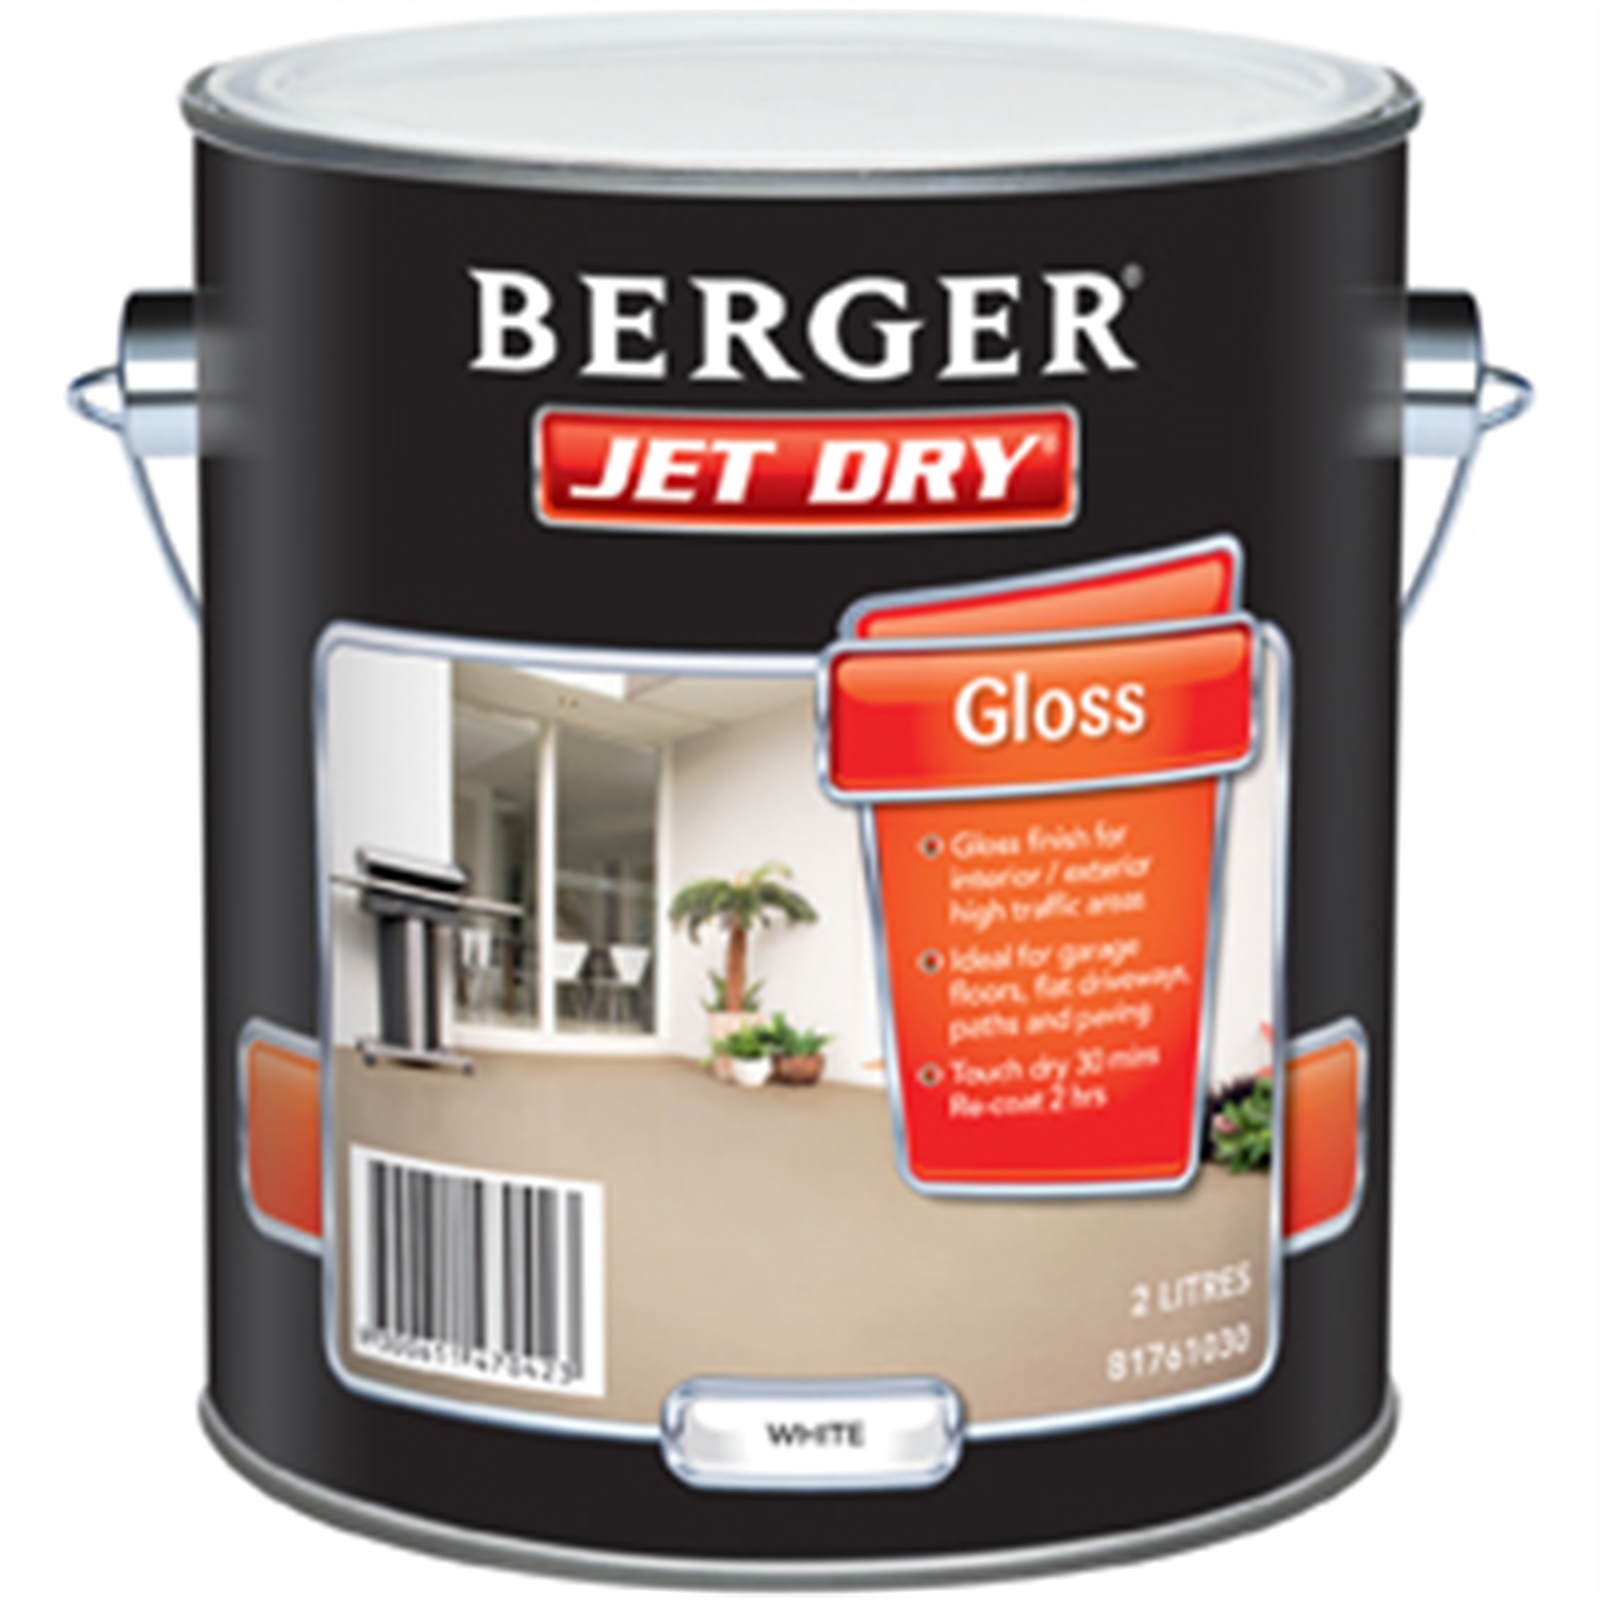 Berger Jet Dry 2L Gloss White Paving Paint